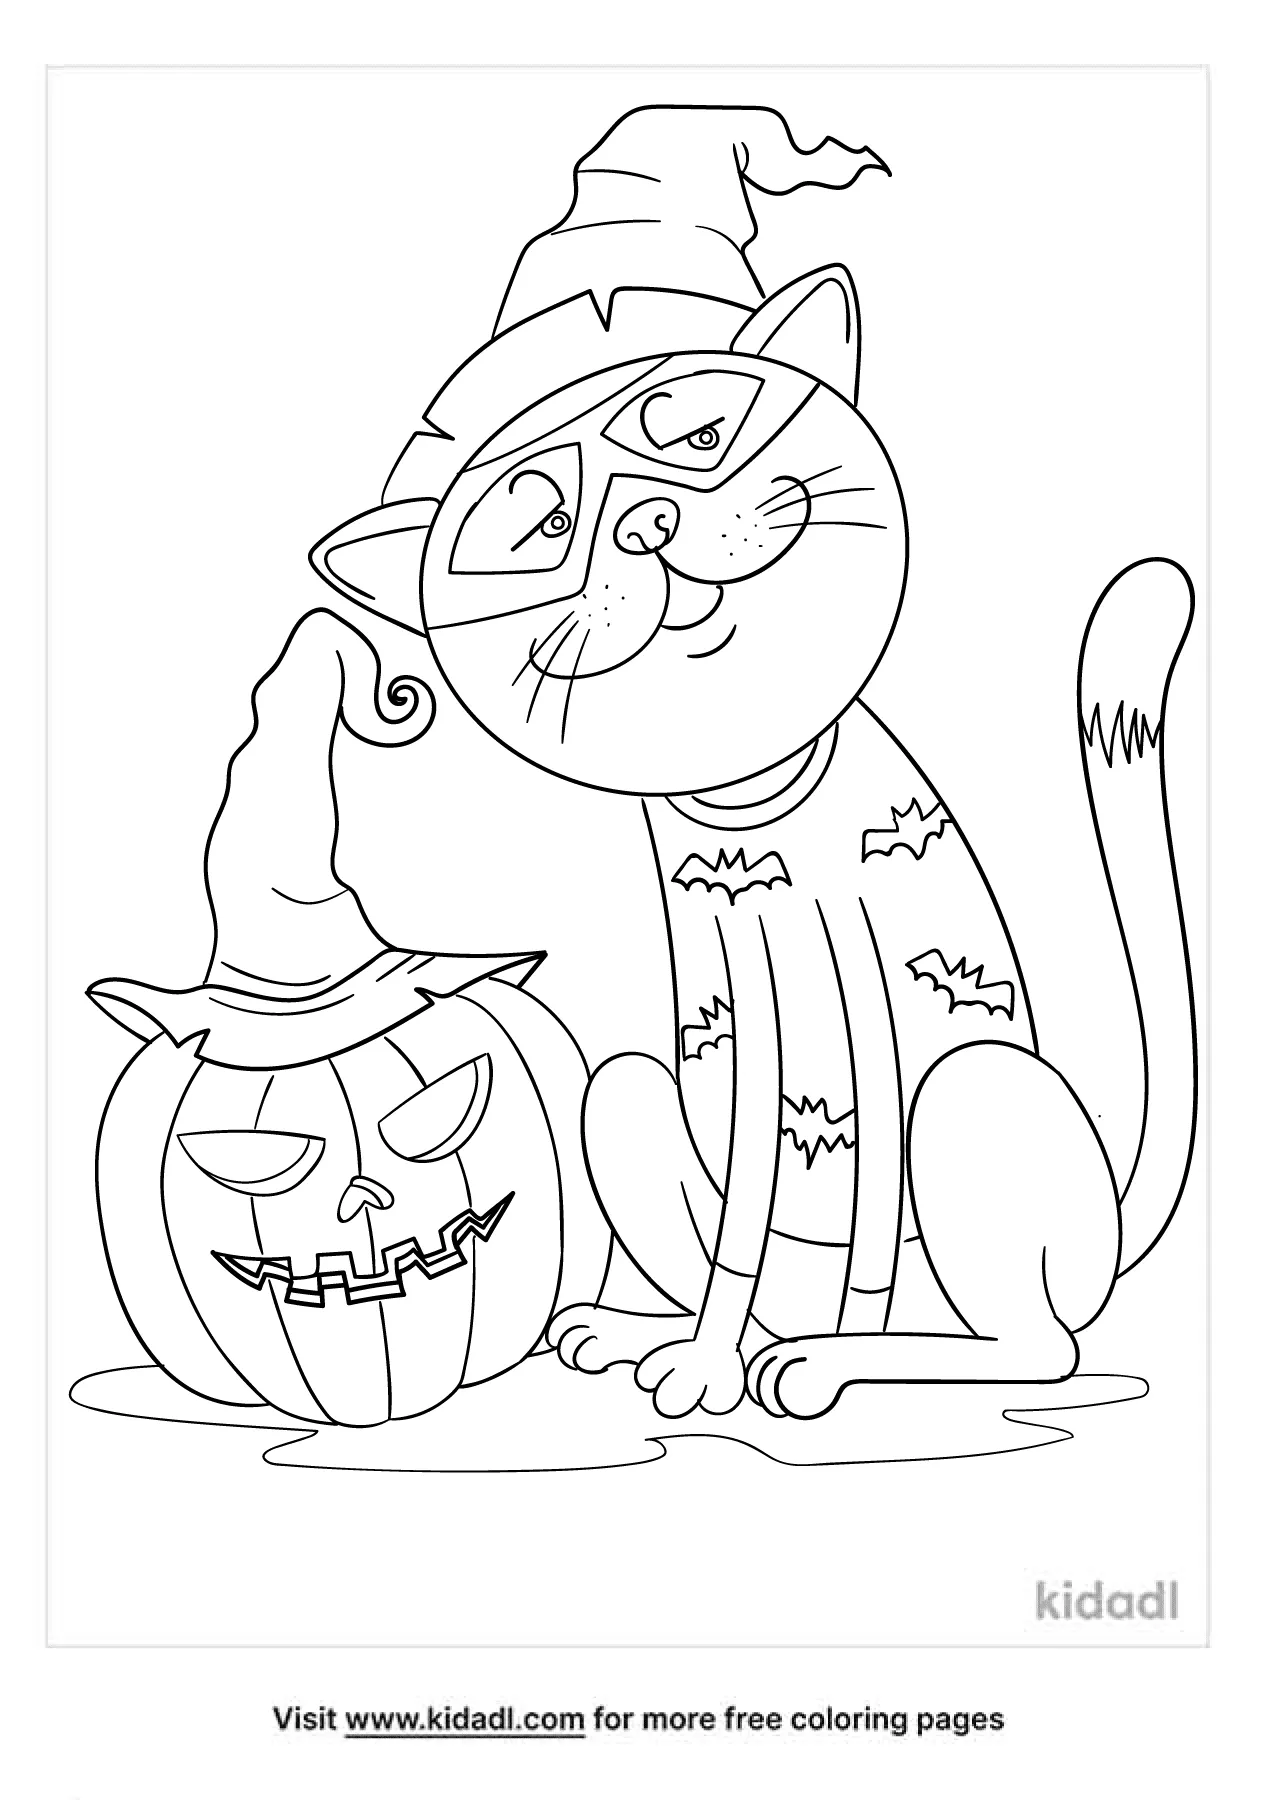 Halloween Animal Coloring Page   Free Halloween Coloring Page   Kidadl